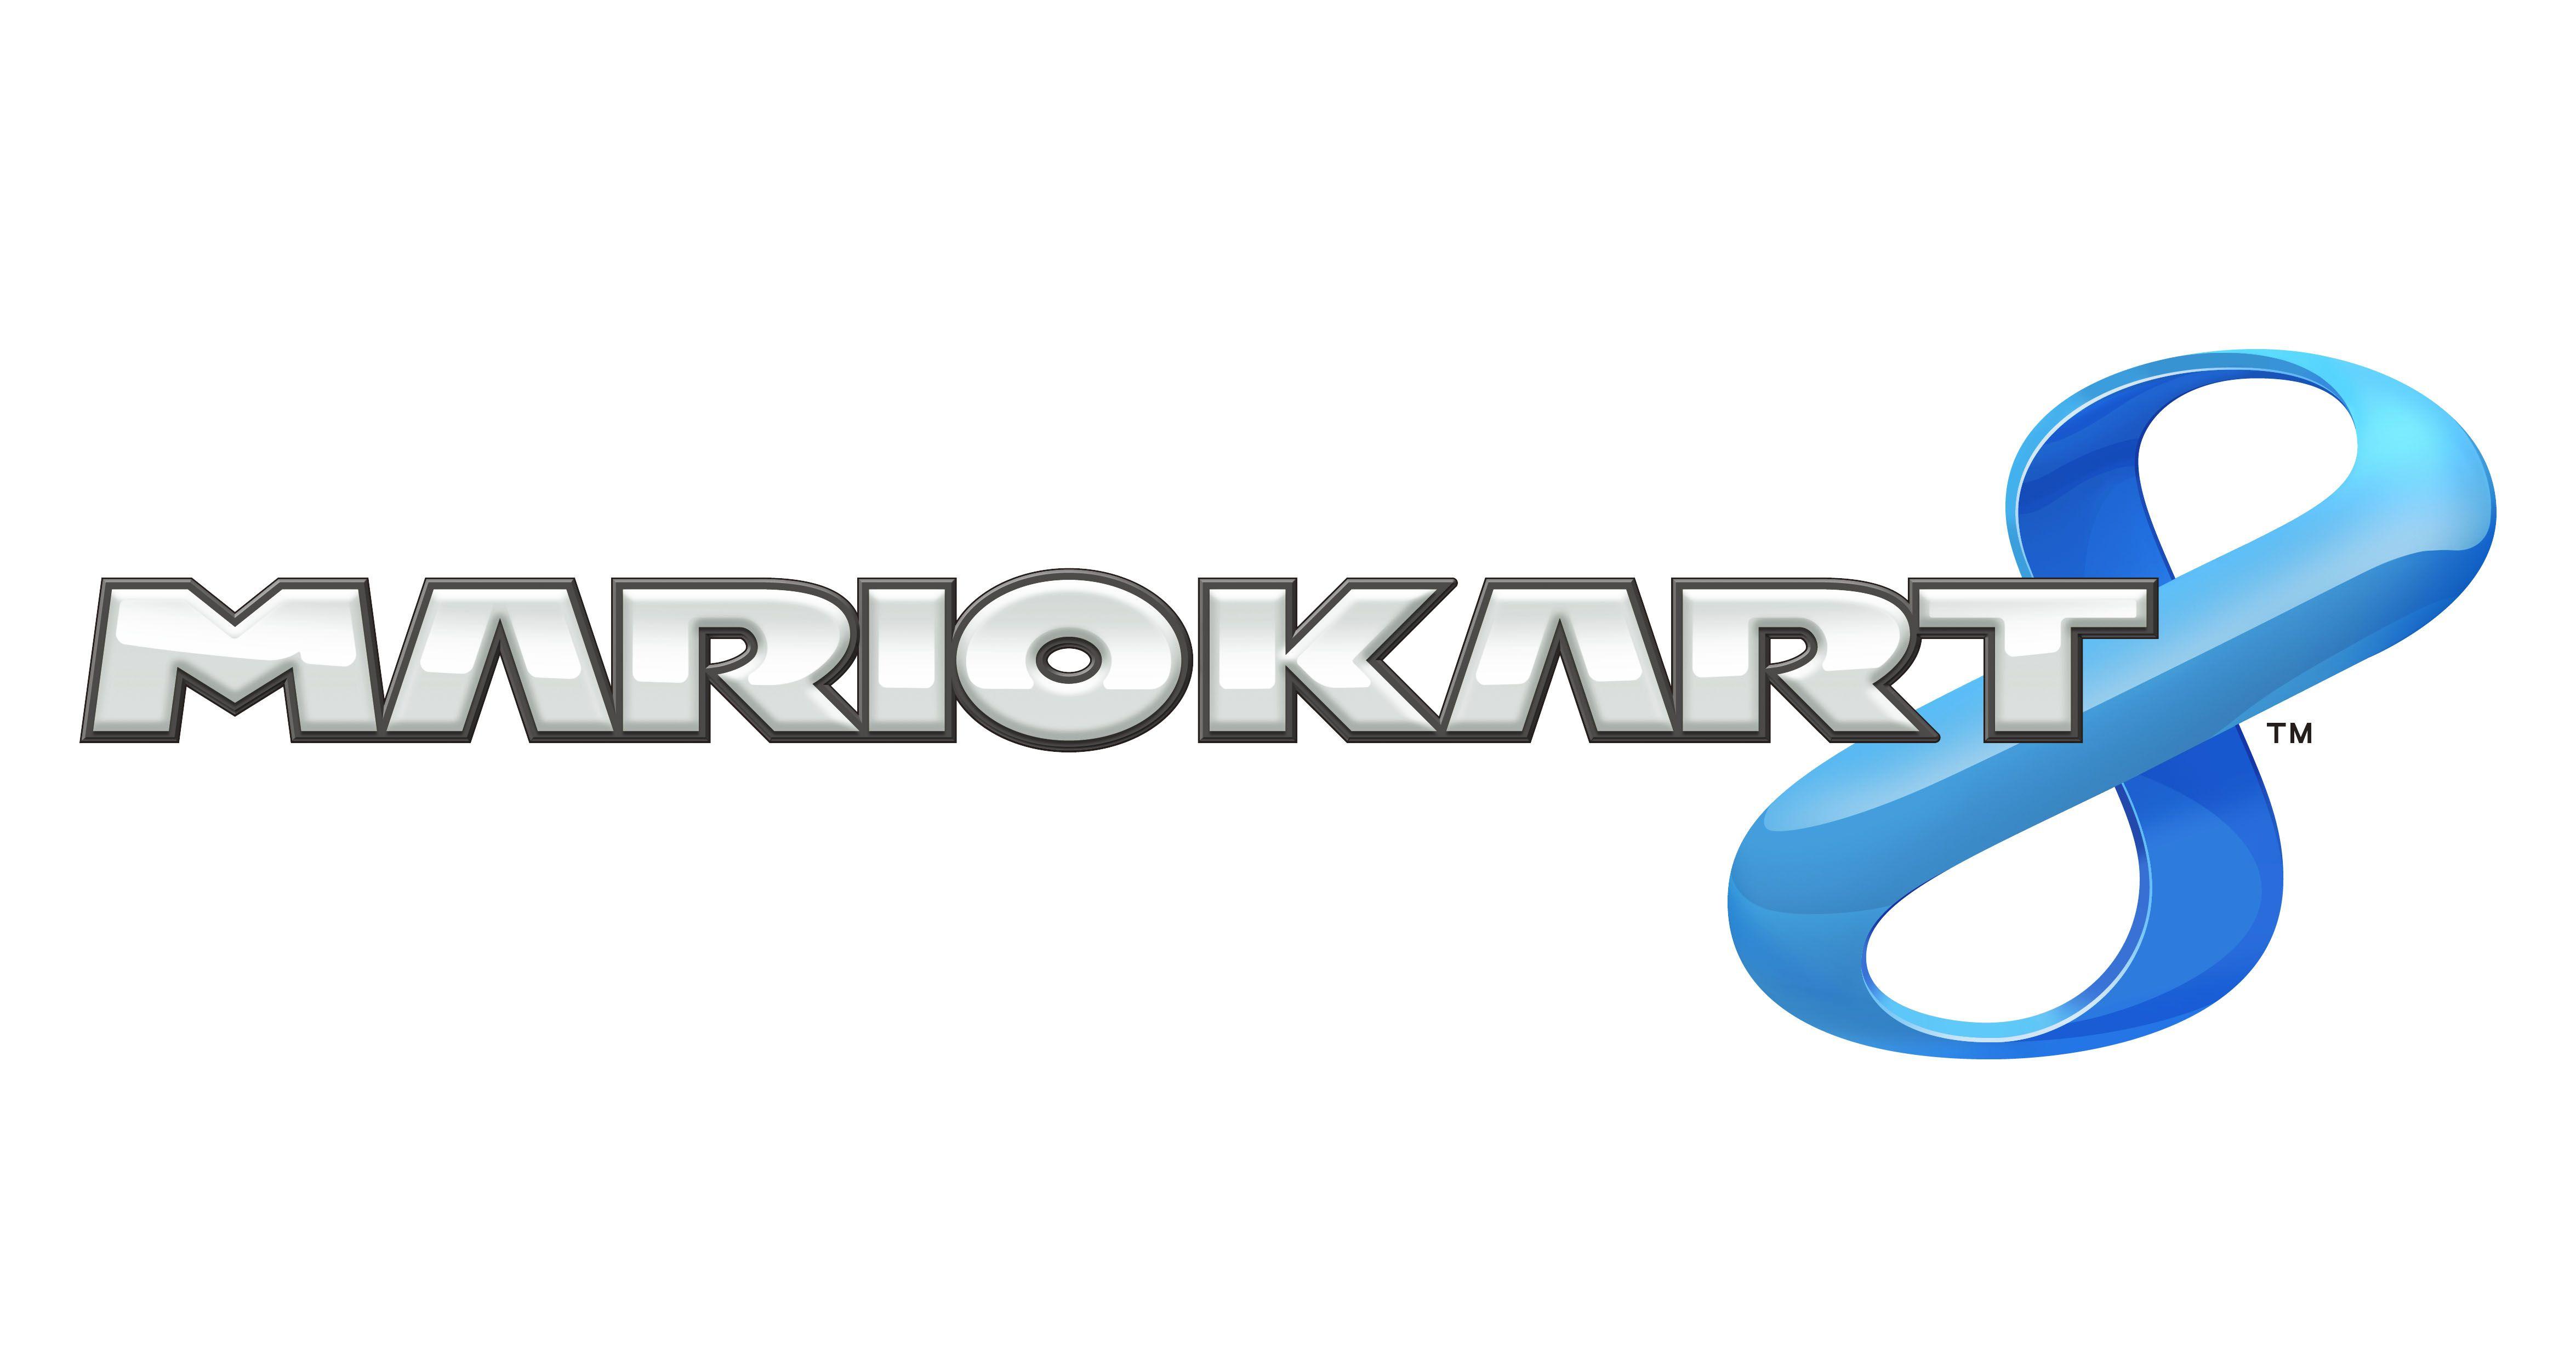 Wii U Logo - E4 partners with Nintendo Wii U Mario Kart TV Game Community